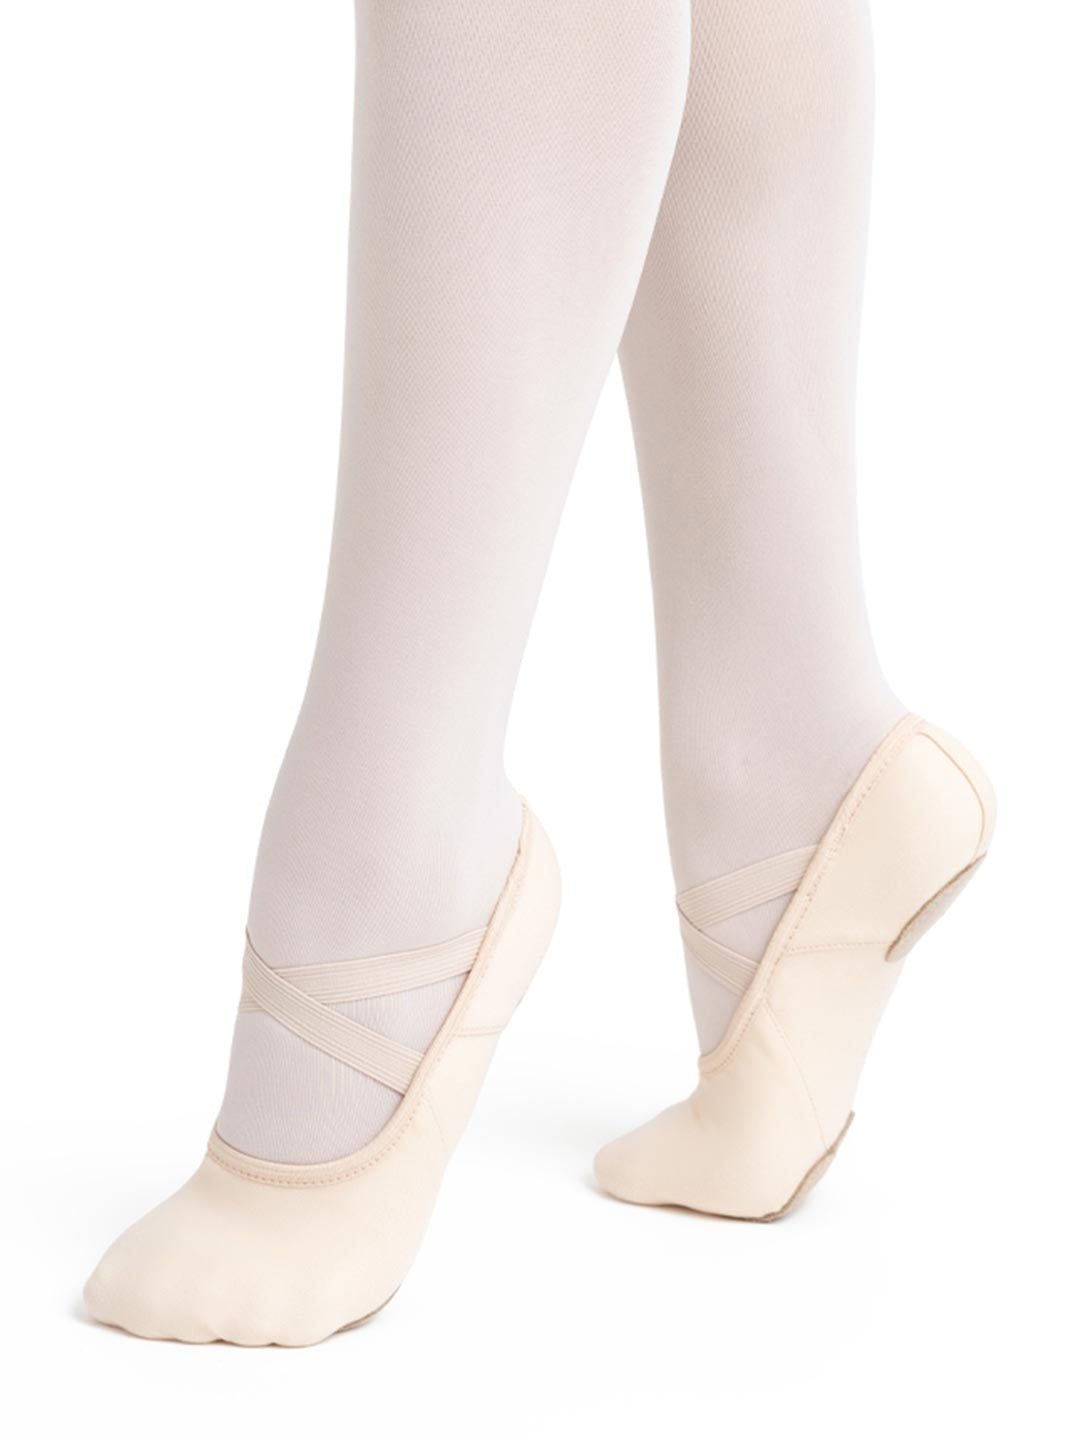 Hanami Canvas Ballet Shoe - Child Light Pink